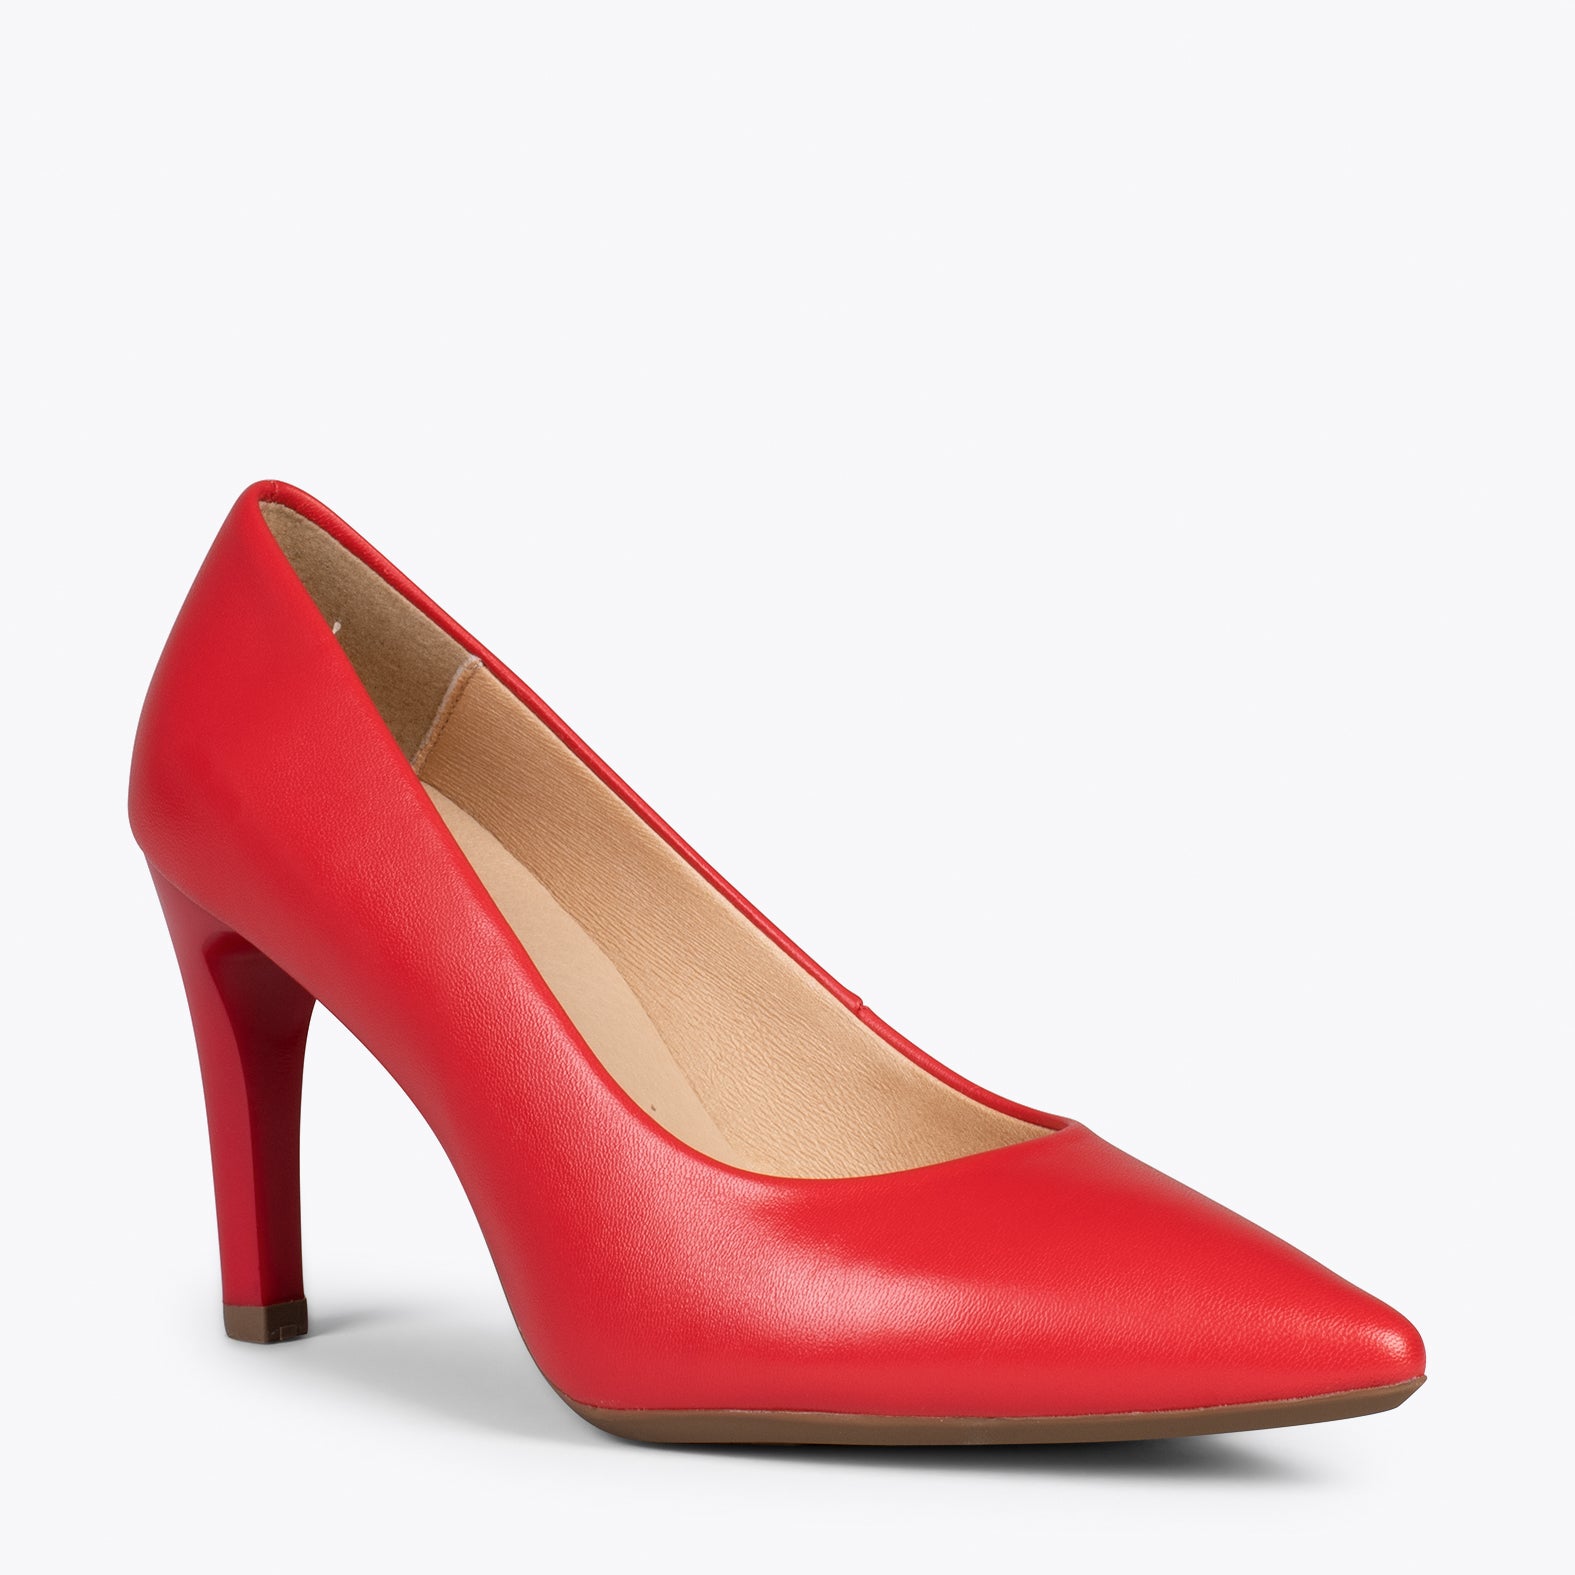 GLAM – RED elegant high heels